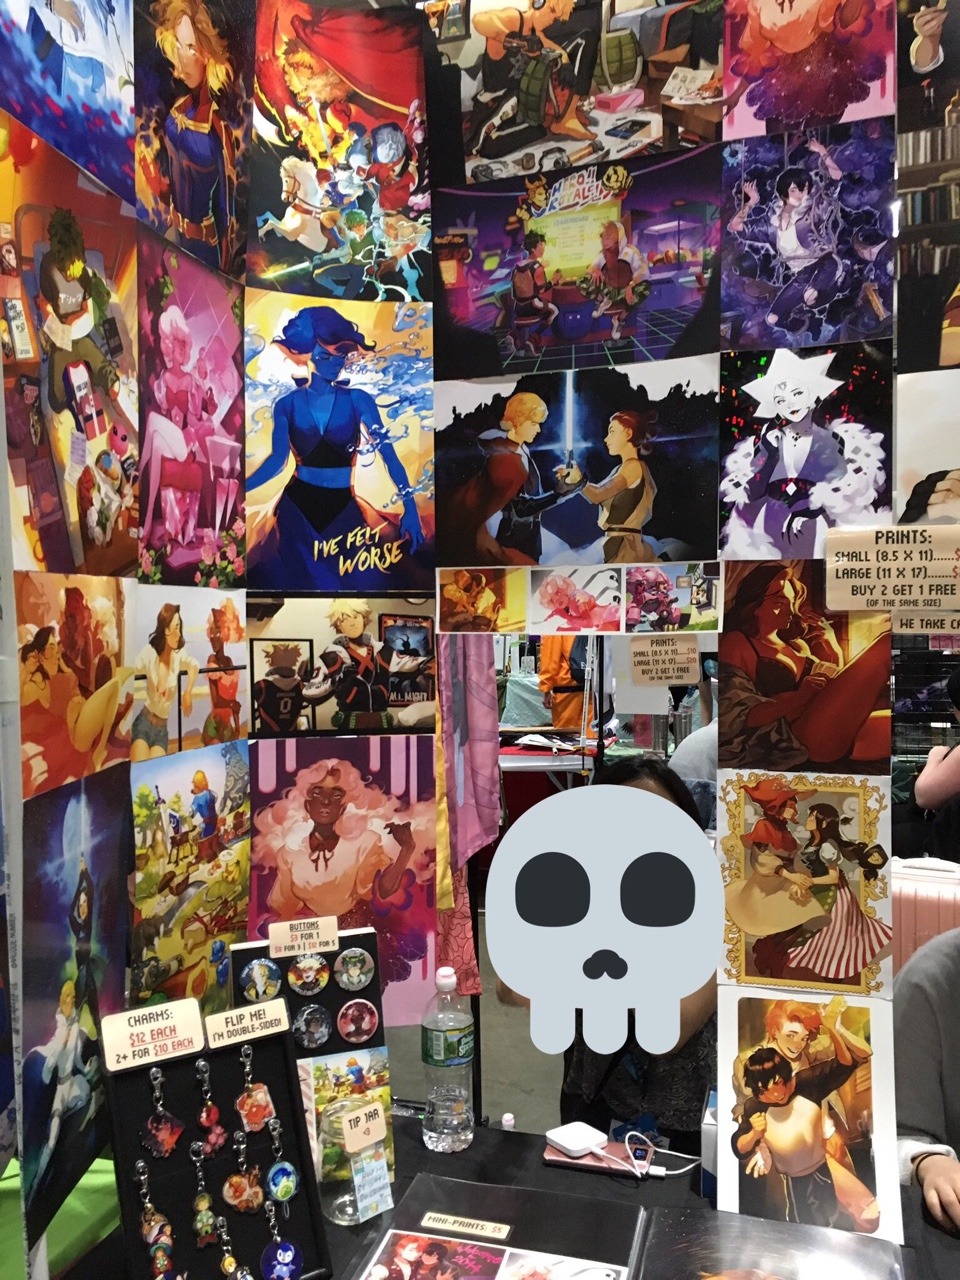 Anime Boston Artist Alley